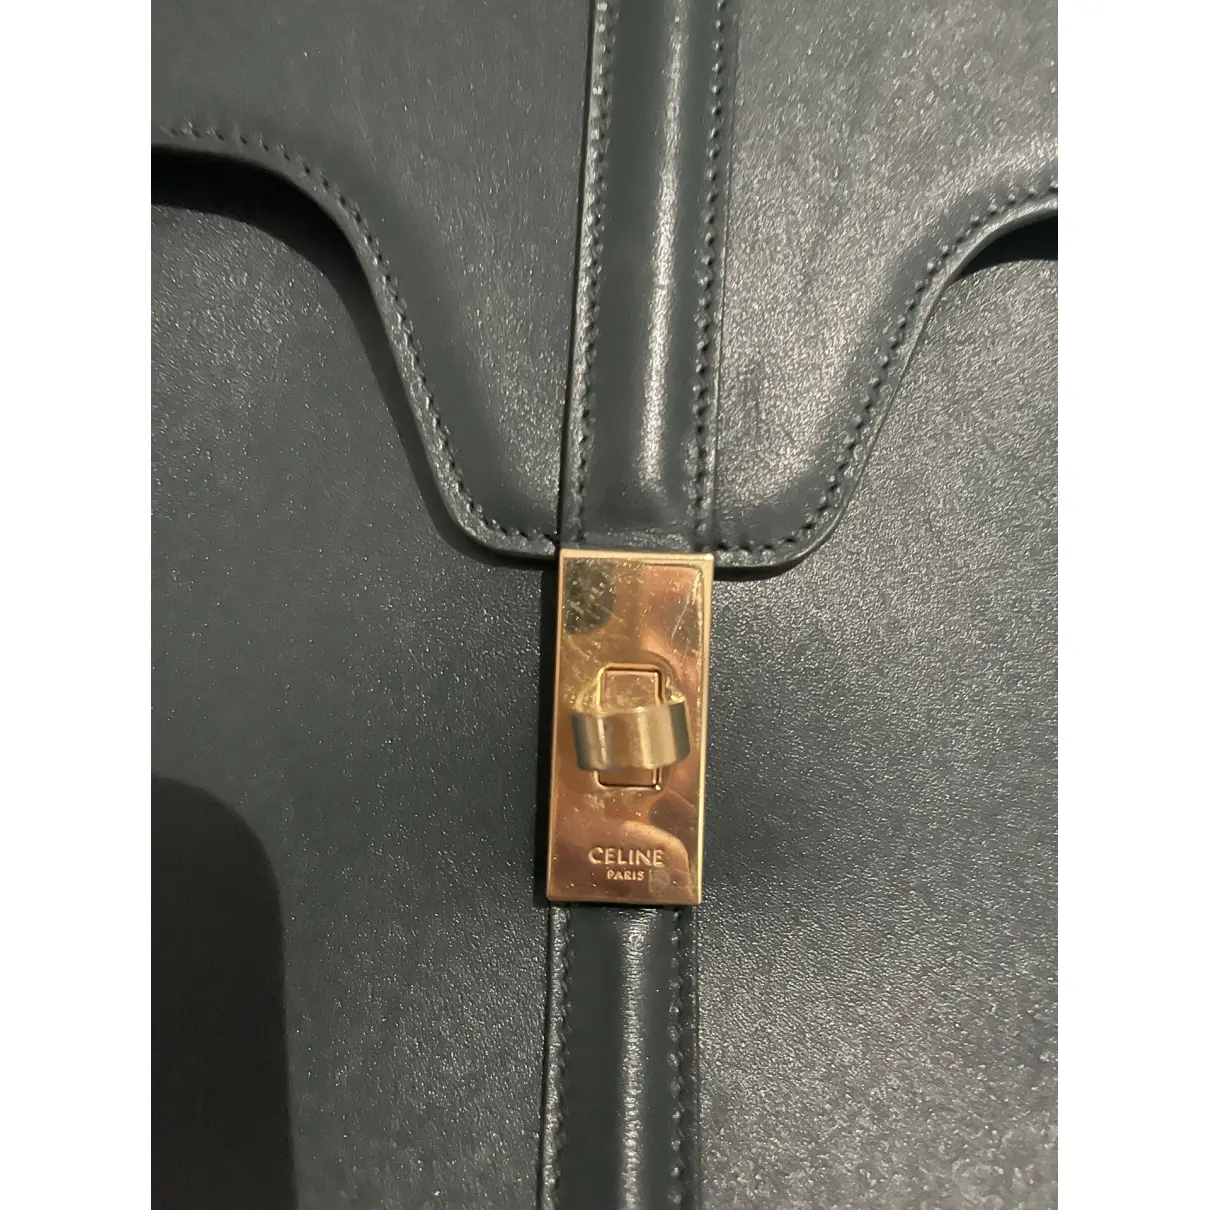 Buy Celine Sac 16 leather satchel online